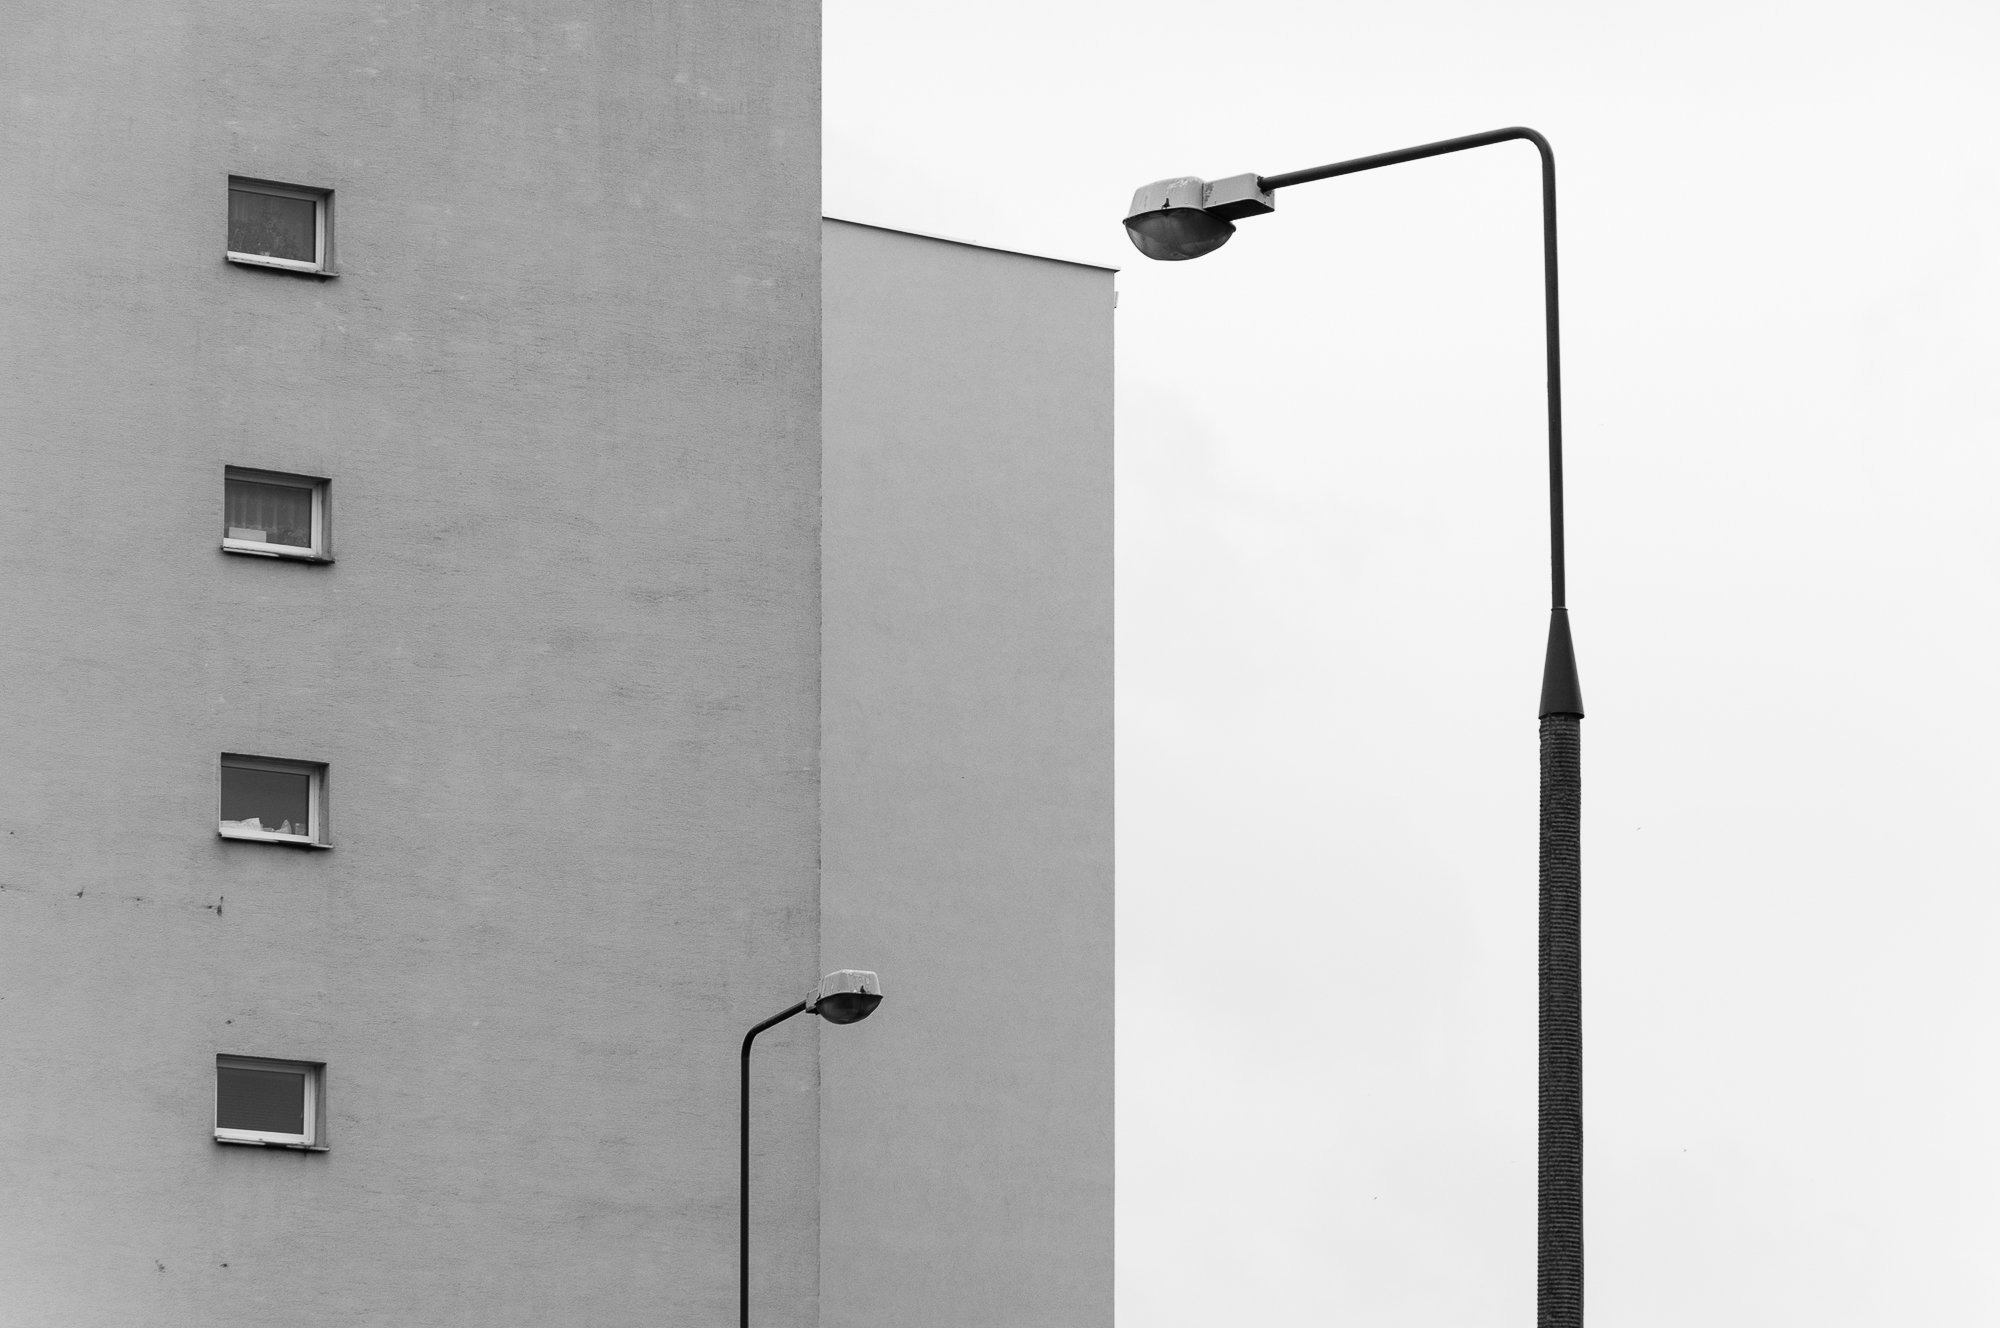 Adam Mazek Photography Warsaw (Warszawa) 2019. Post: "Designing "Diaries"." Minimalism. Street lamps and windows. Perspective.